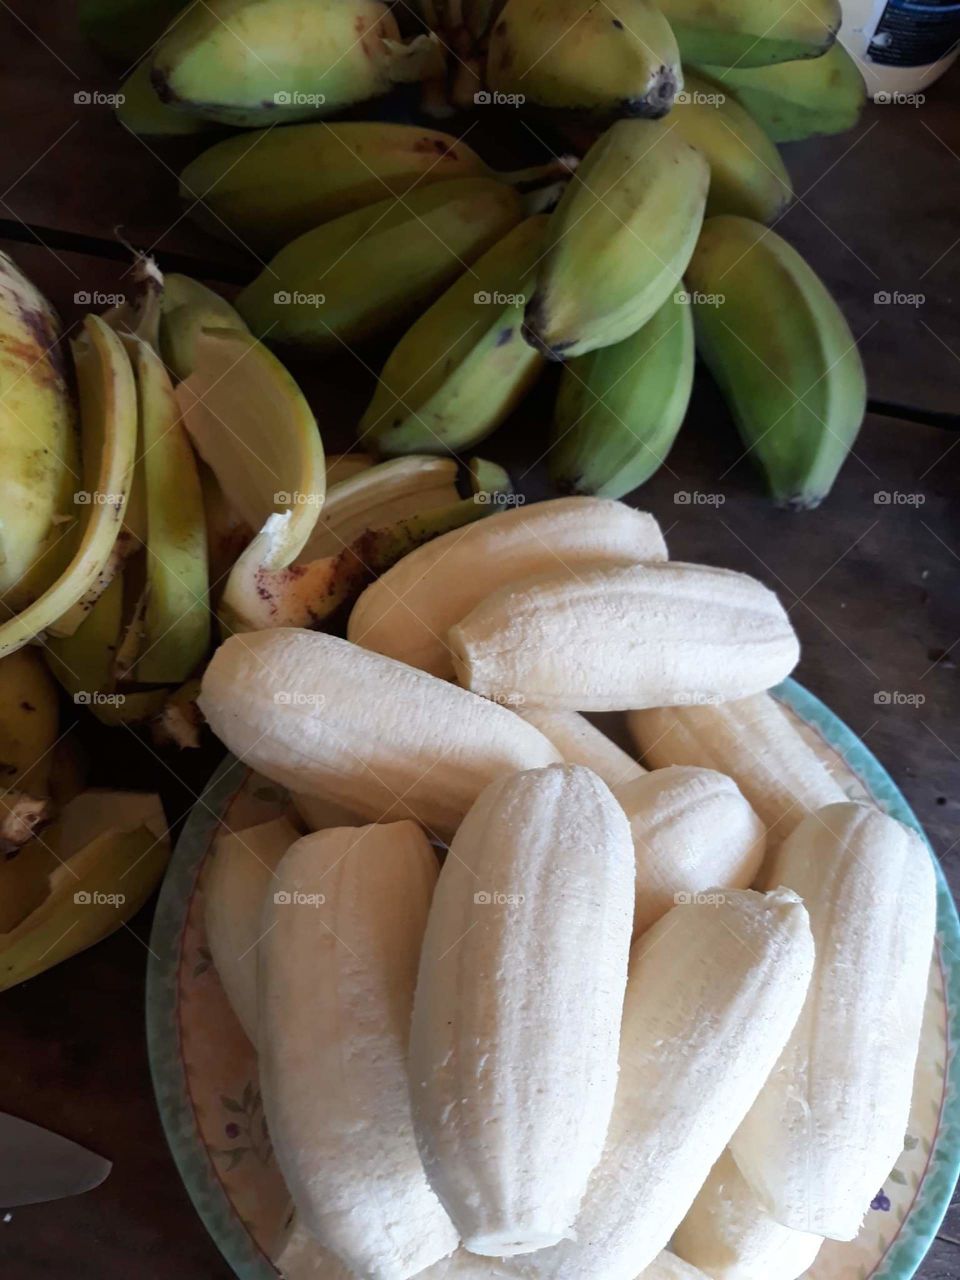 Preparing bananas for frying. An all-time family's favorite snacks.